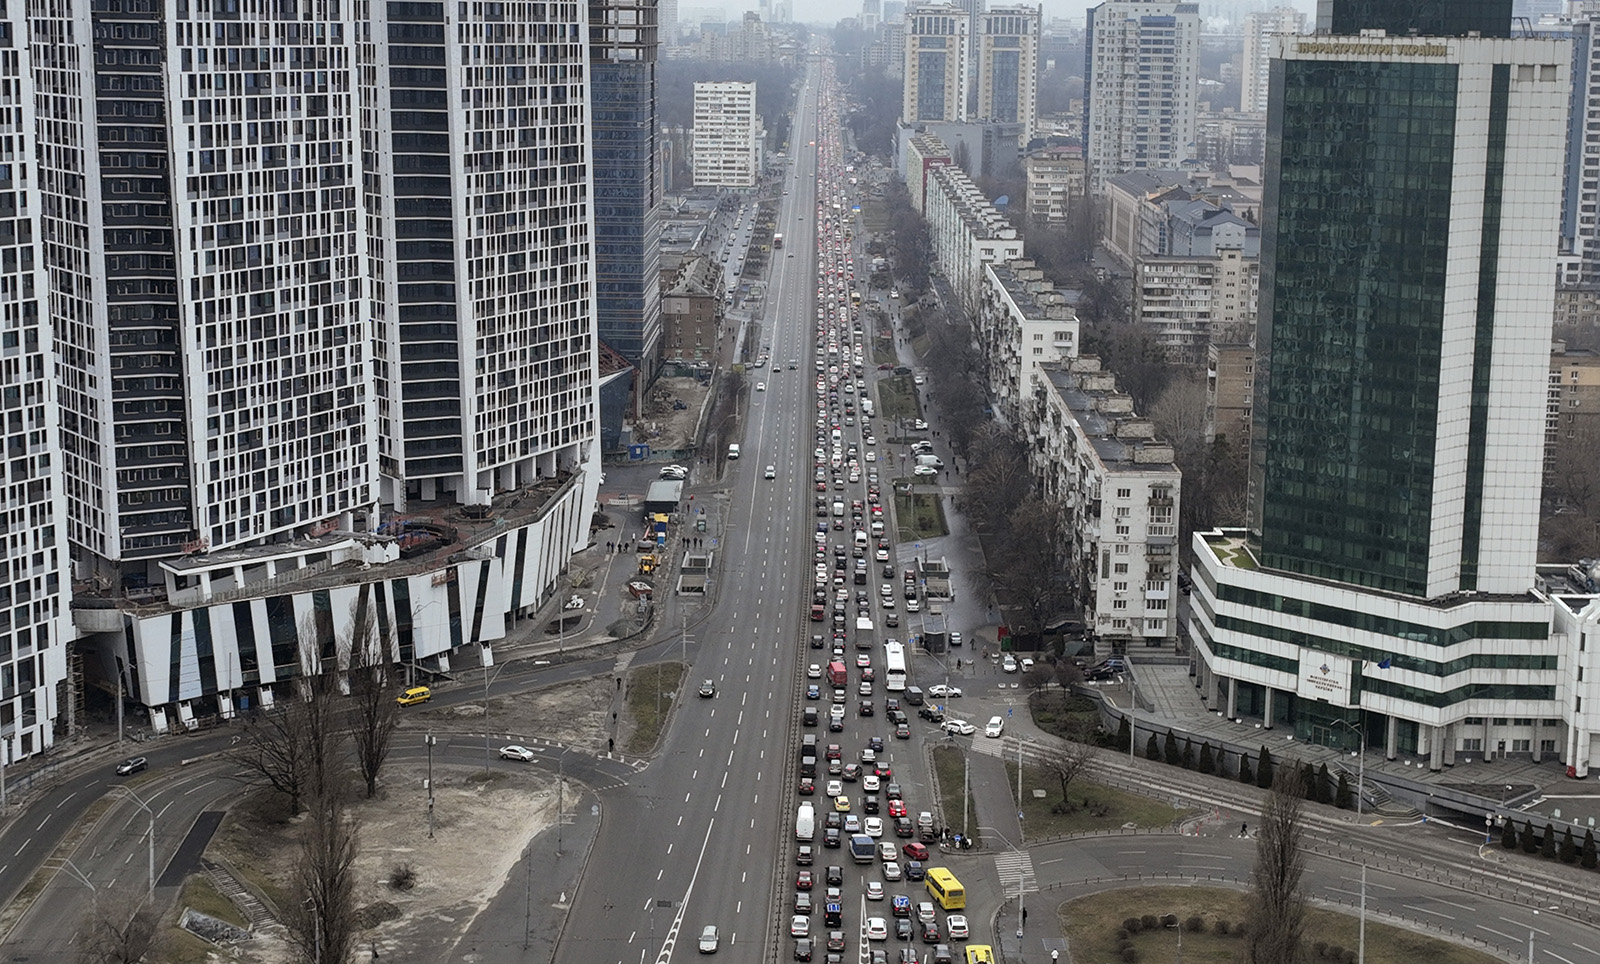 Traffic jams are seen as people leave the city of kyiv, Ukraine, February 24, 2022. (AP Photo/Emilio Morenatti)